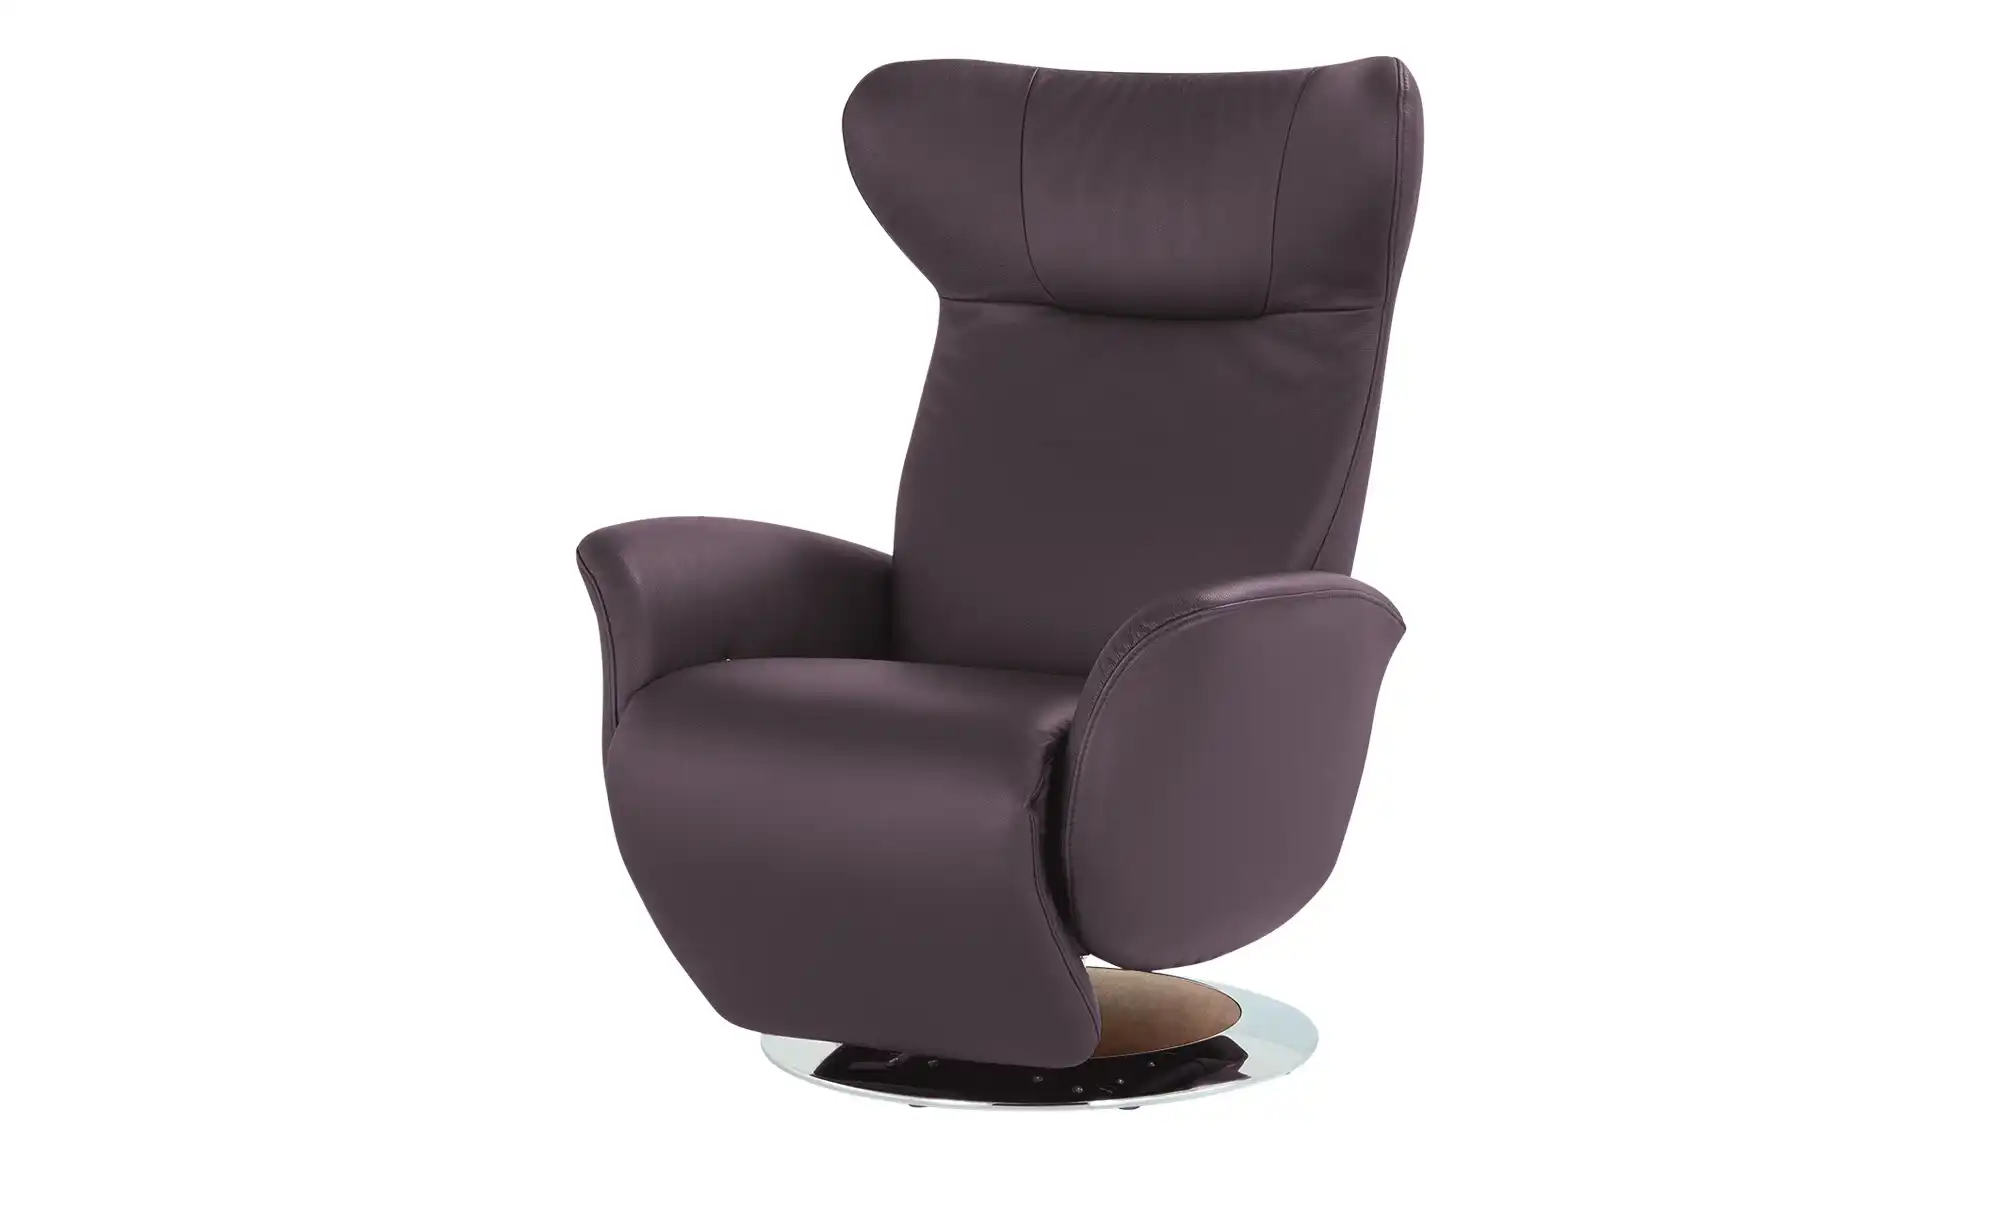 JOOP! Relaxsessel aus Leder Lounge 8140 ¦ lila violett Polstermöbel Sessel Fernsehsessel Höffner  - Onlineshop Möbel Höffner